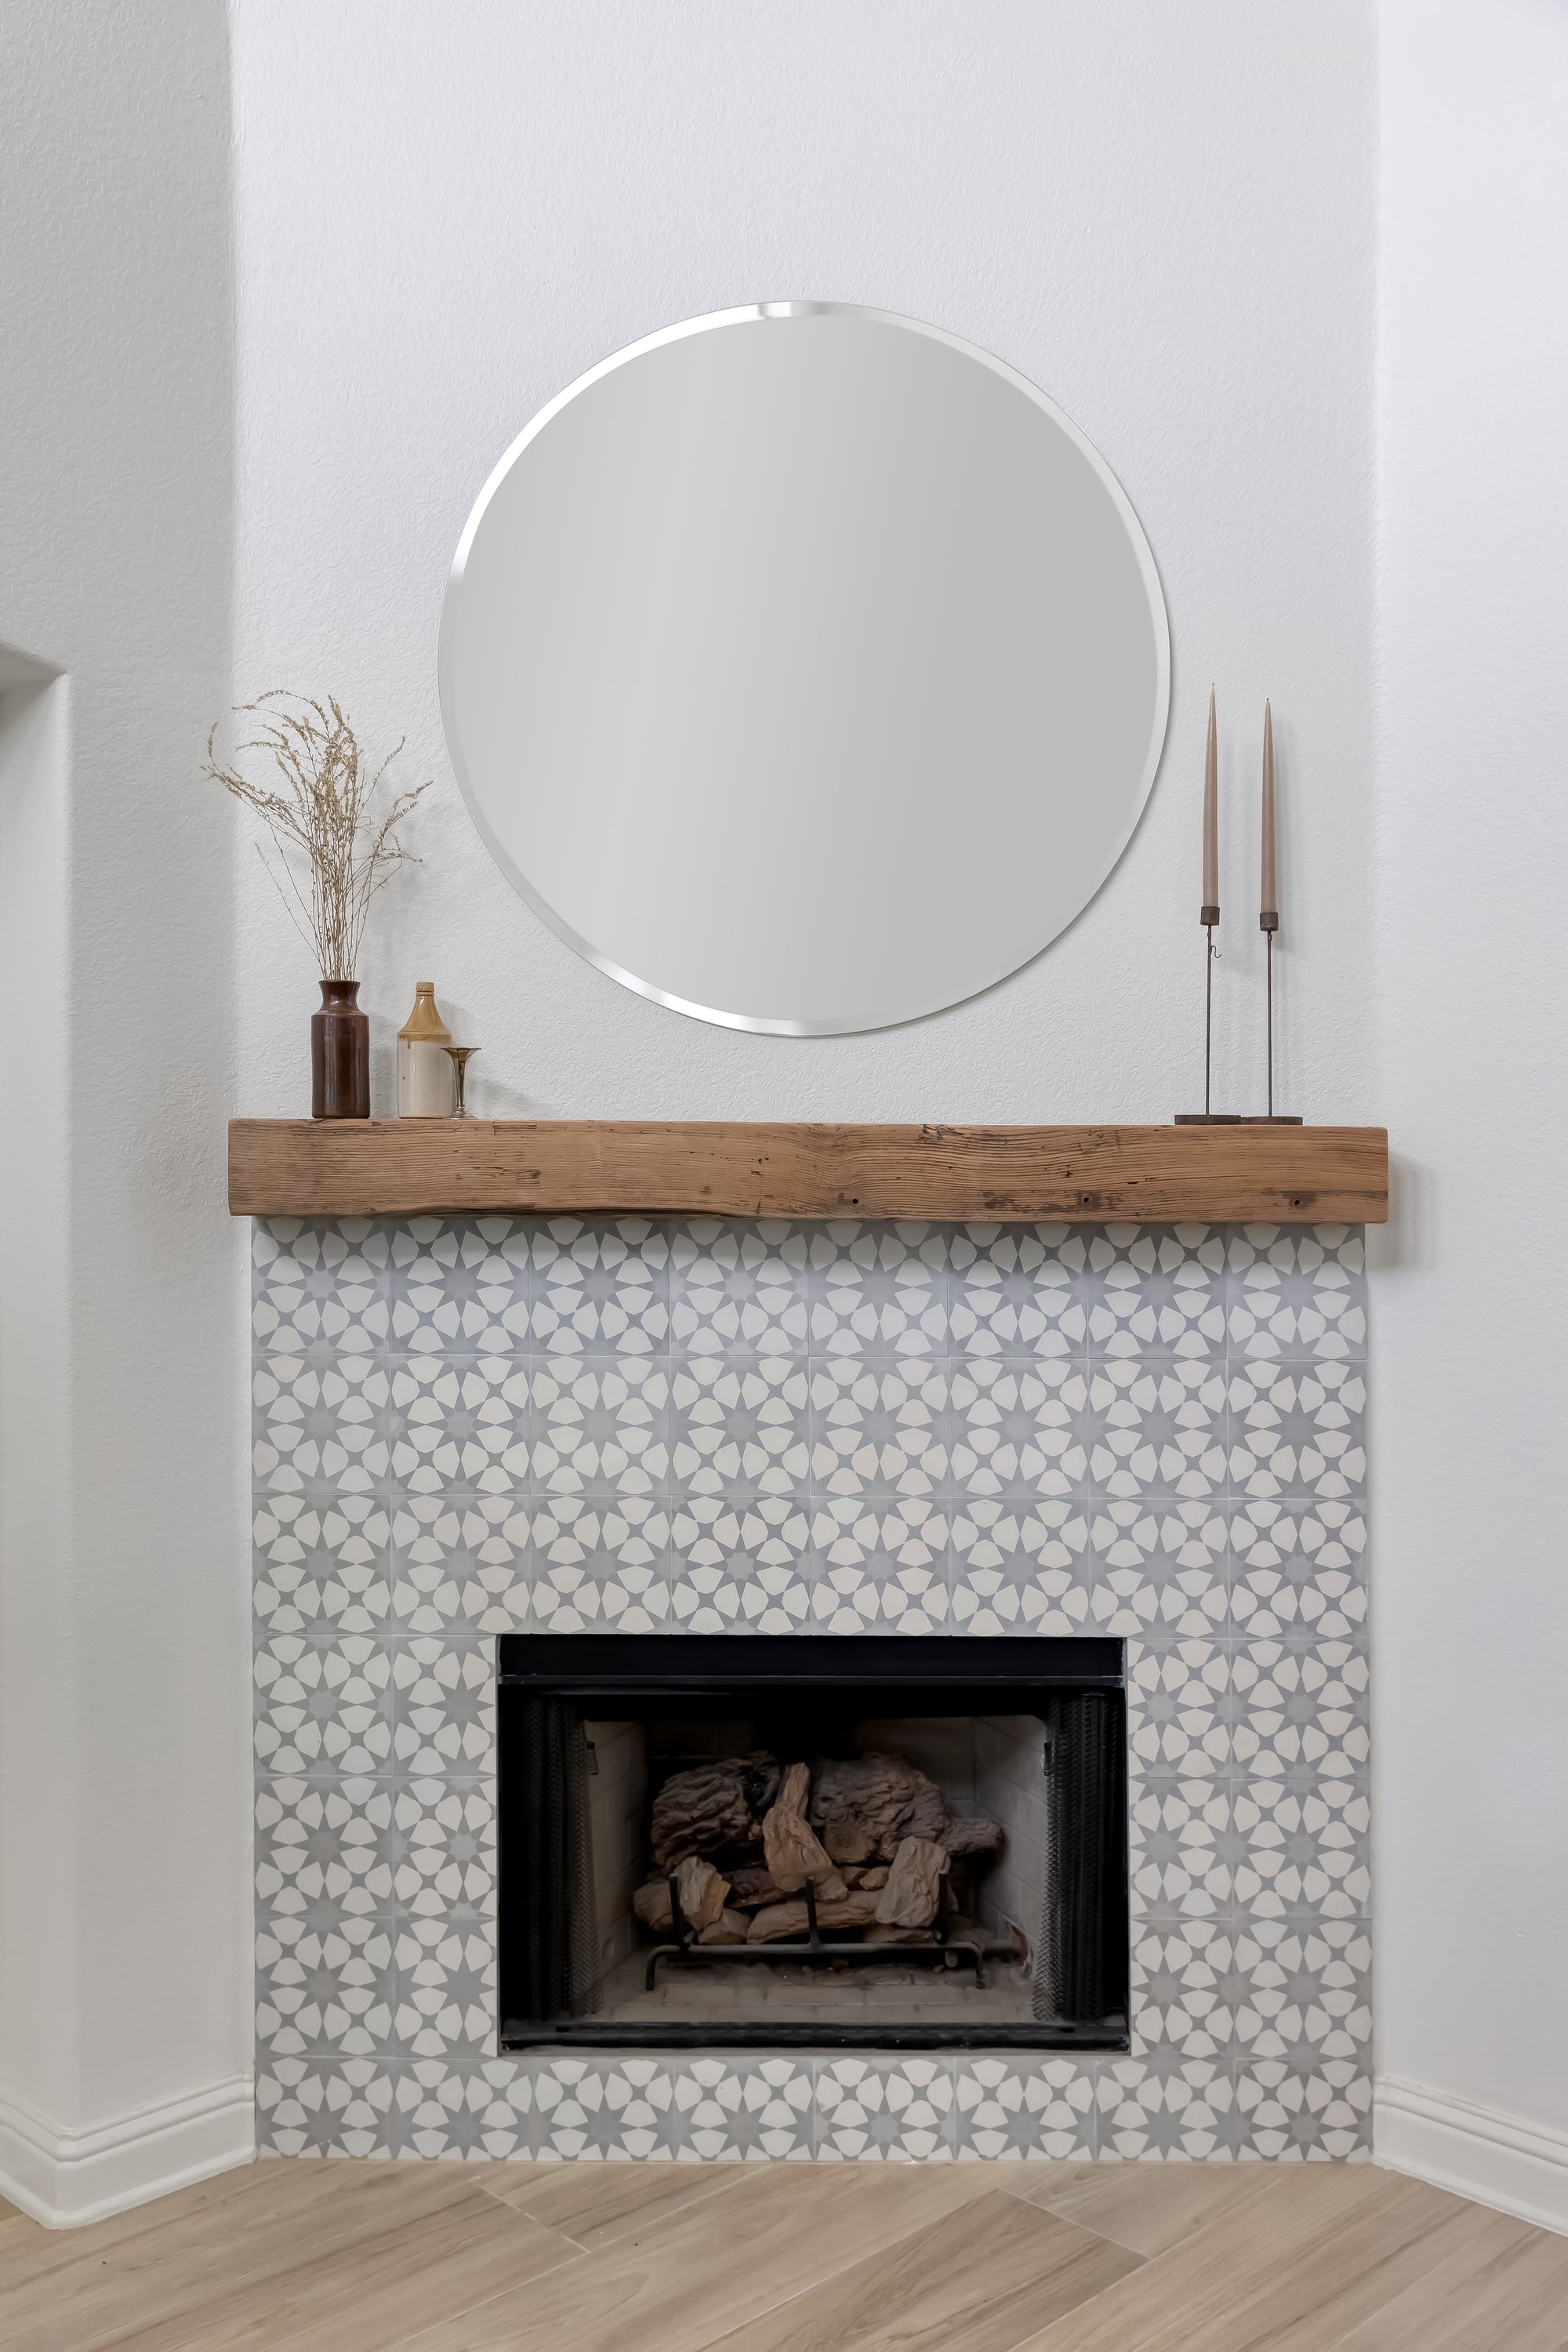 Rustic Reclaimed Wood Mantel - Tile Fireplace With Wood Mantel - Dakota Timber Co Reclaimed Wood Mantels